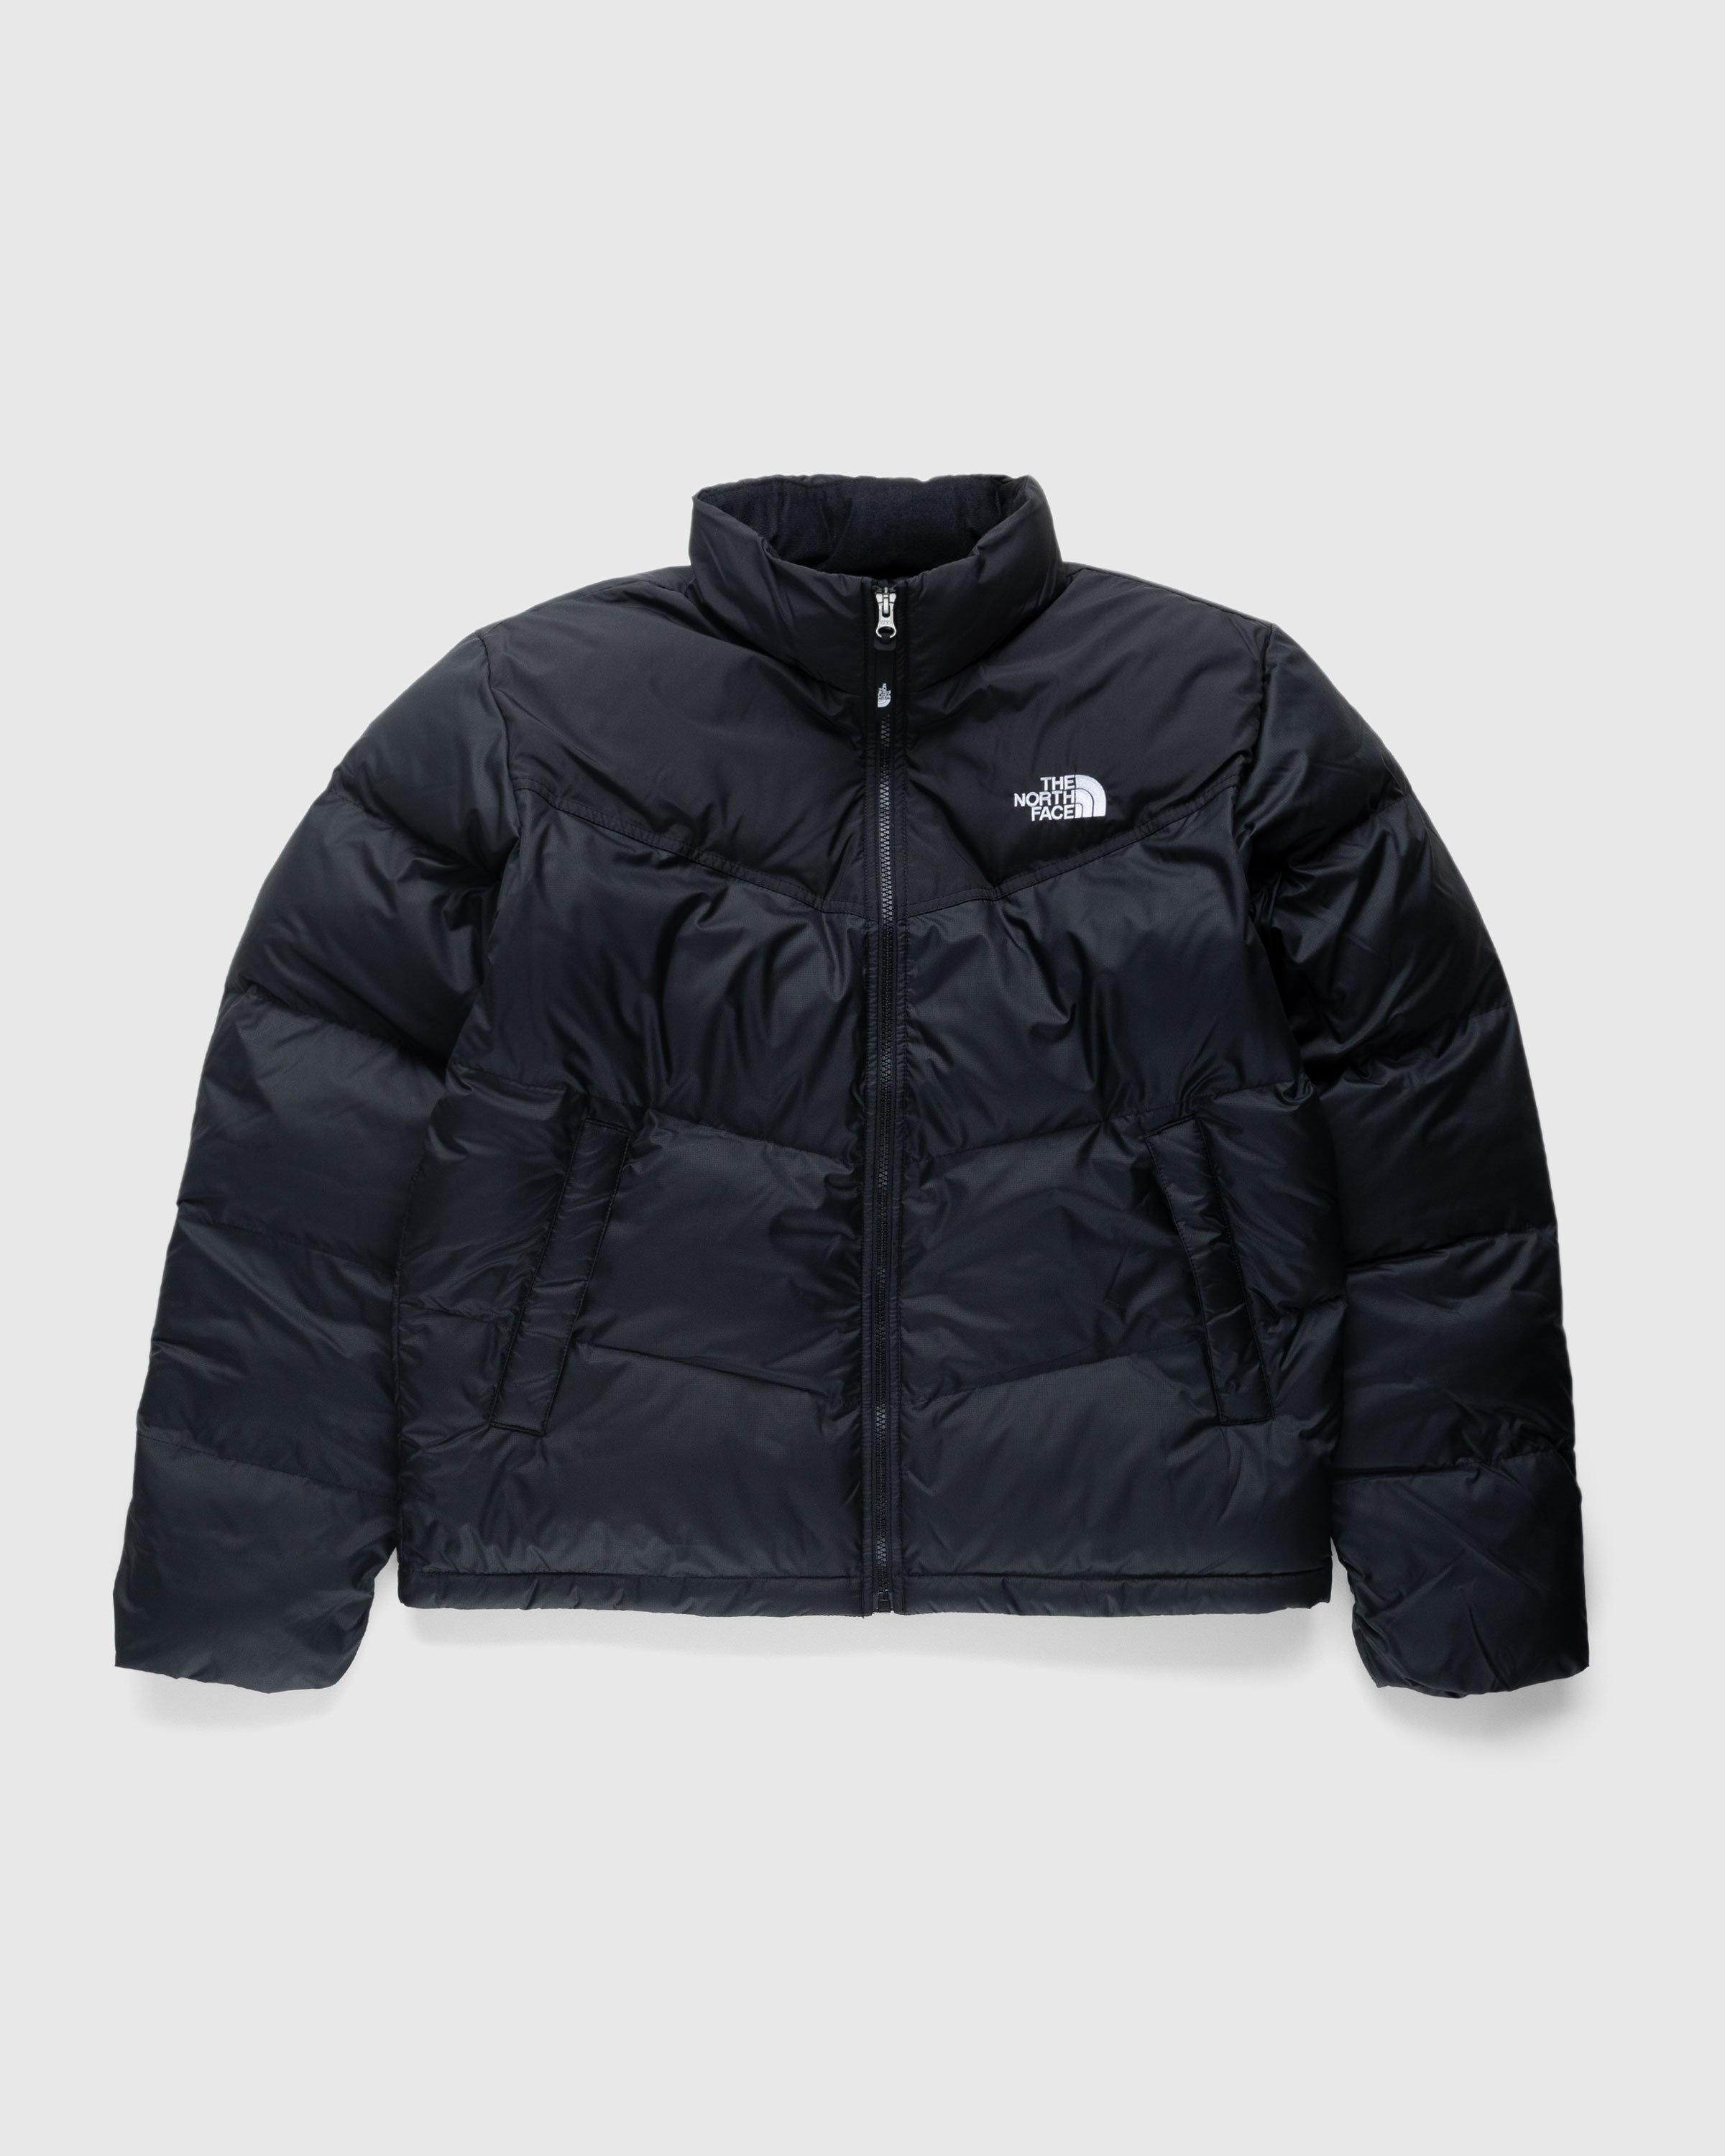 The North Face – Saikuru Jacket TNF Black - Outerwear - Black - Image 1